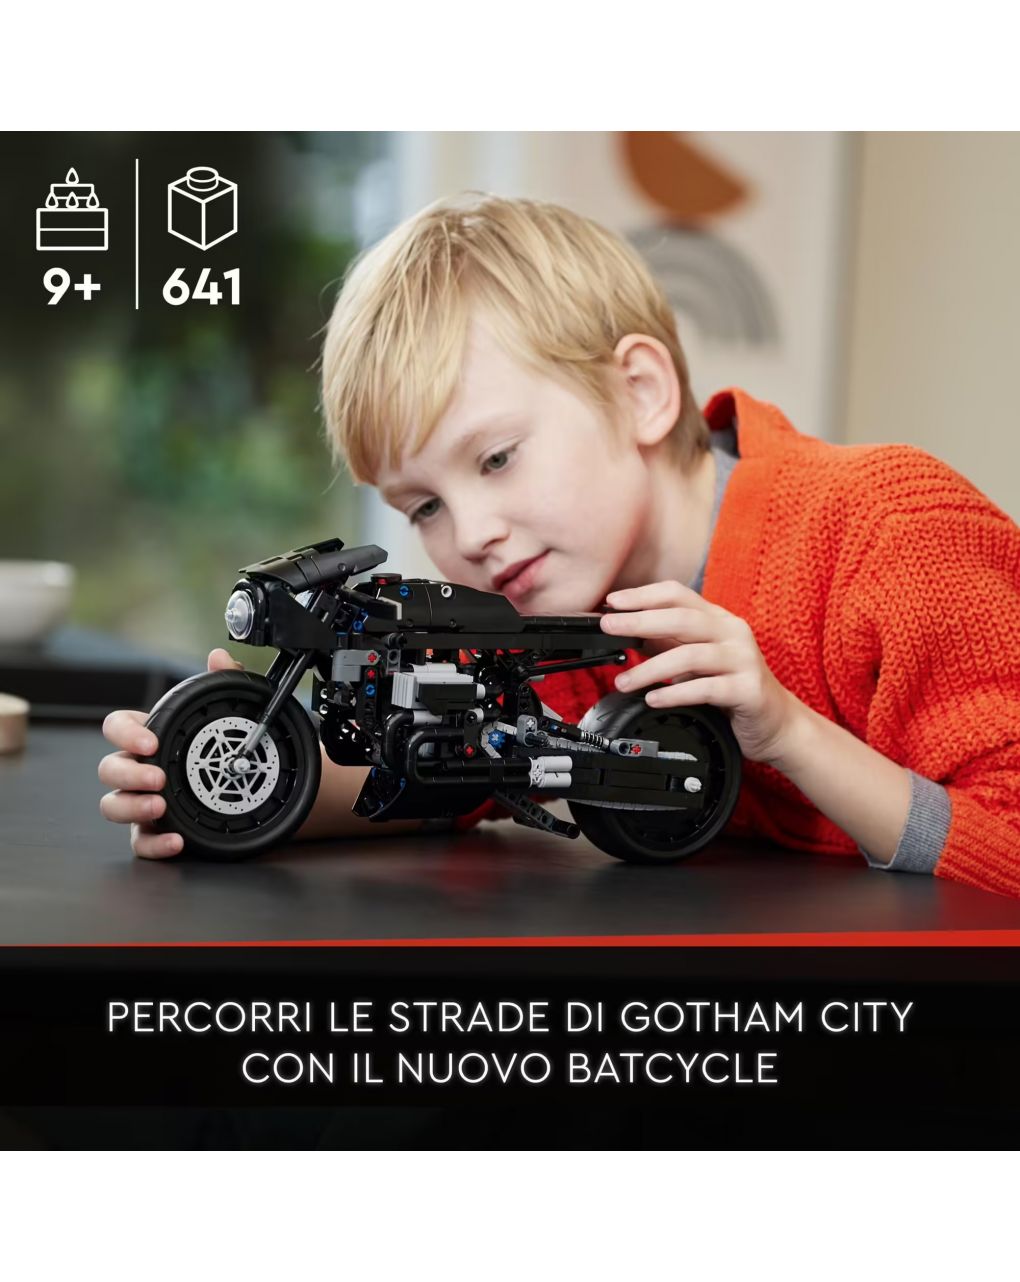 Batmoto the batman 2022 - lego technic - LEGO